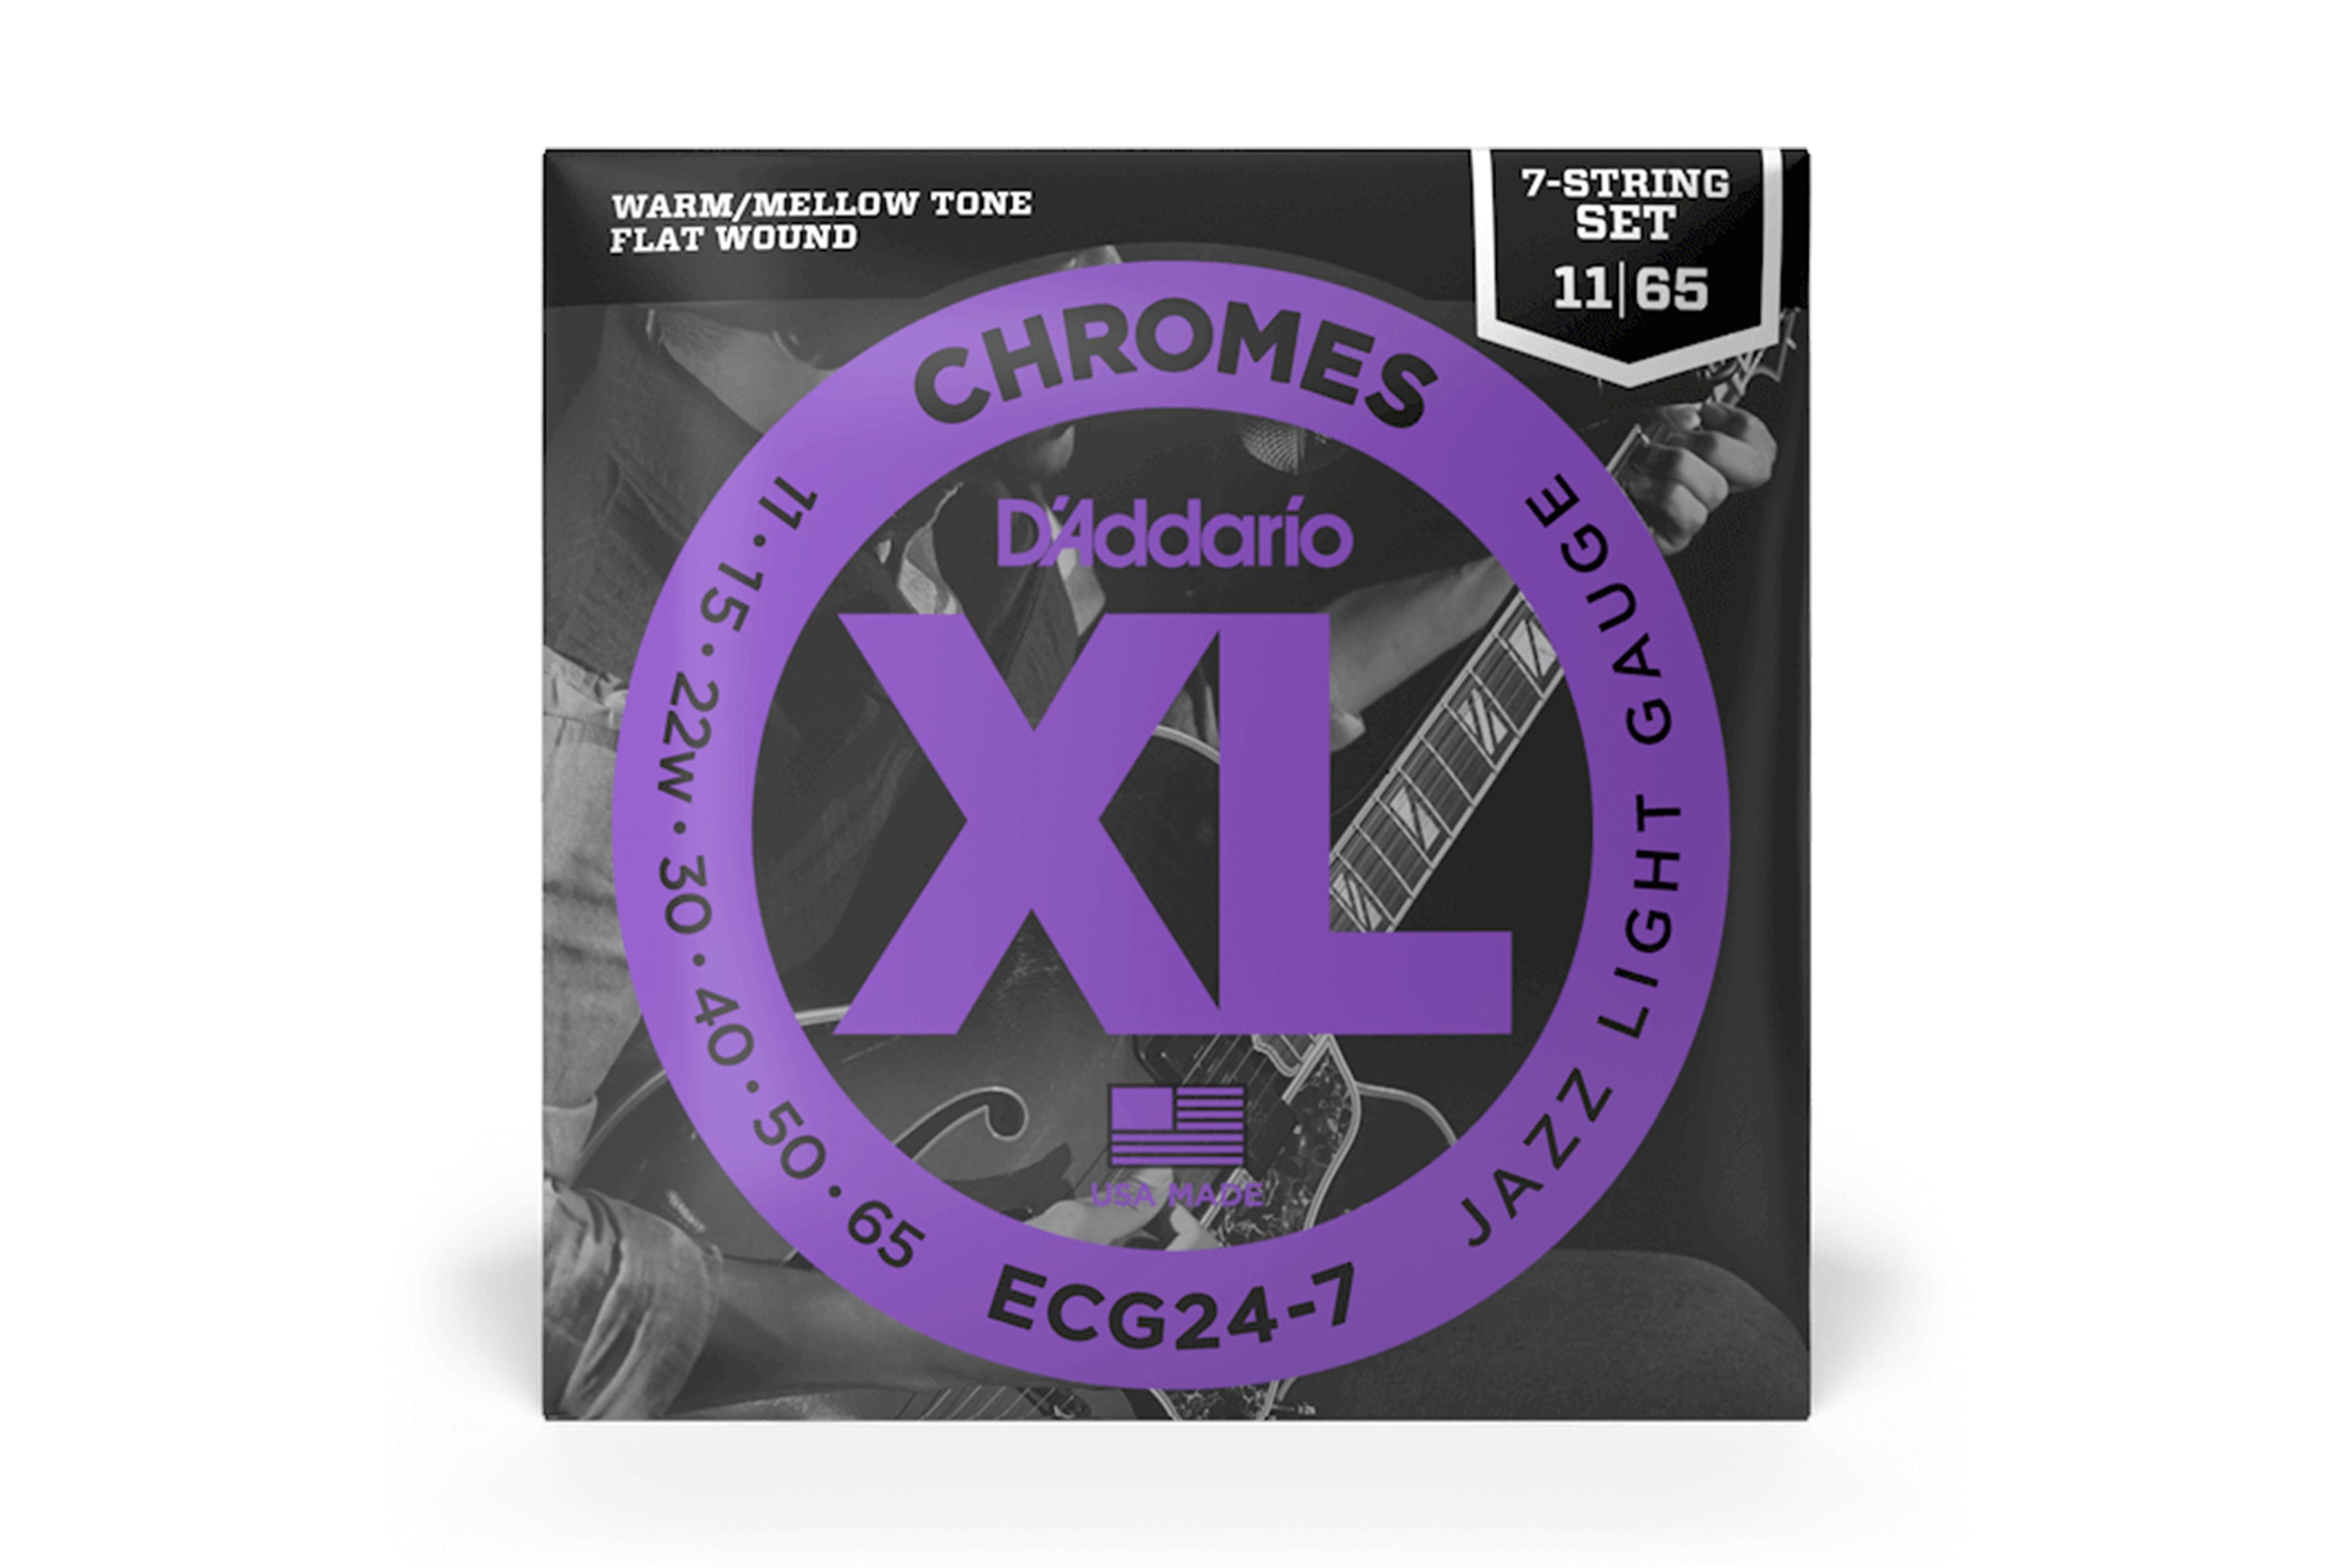 D'Addario ECG24-7 XL Strings